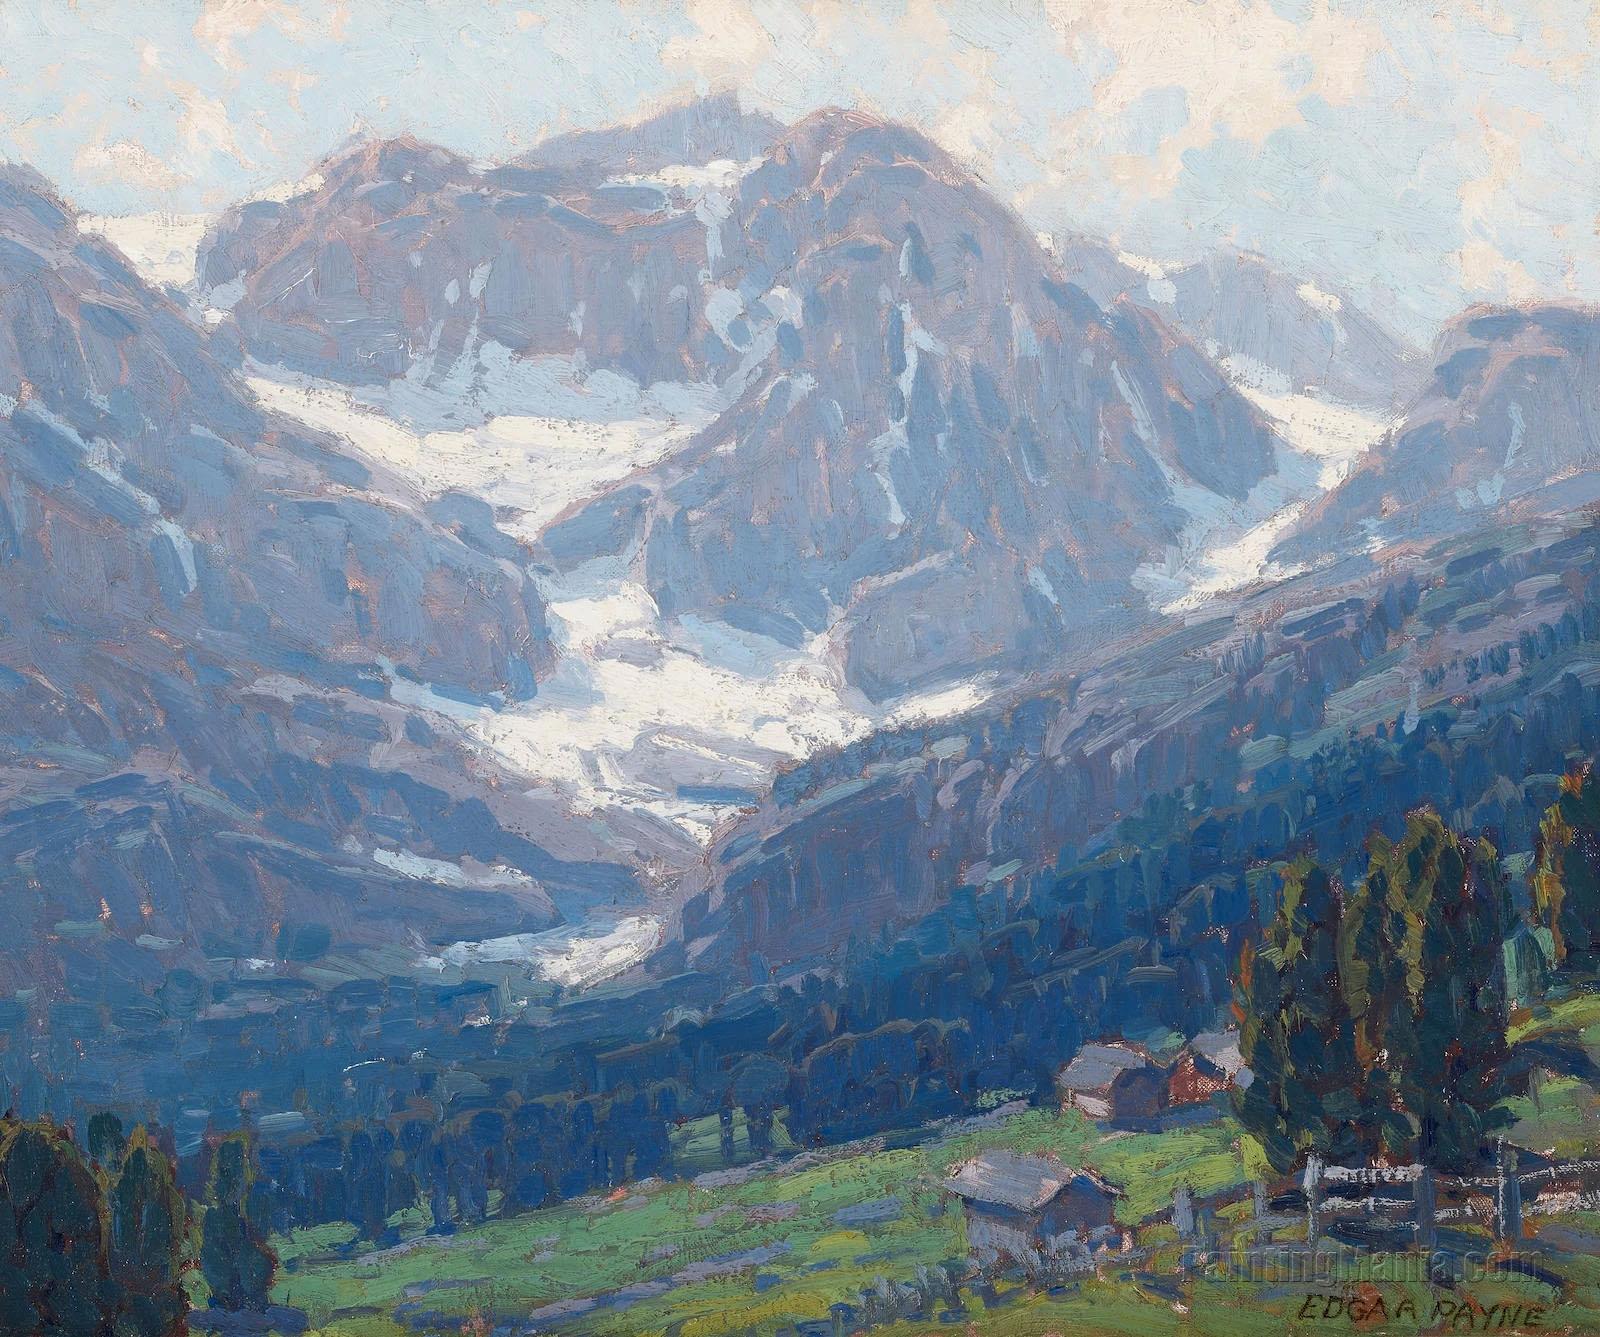 Alpine scene - Switzerland